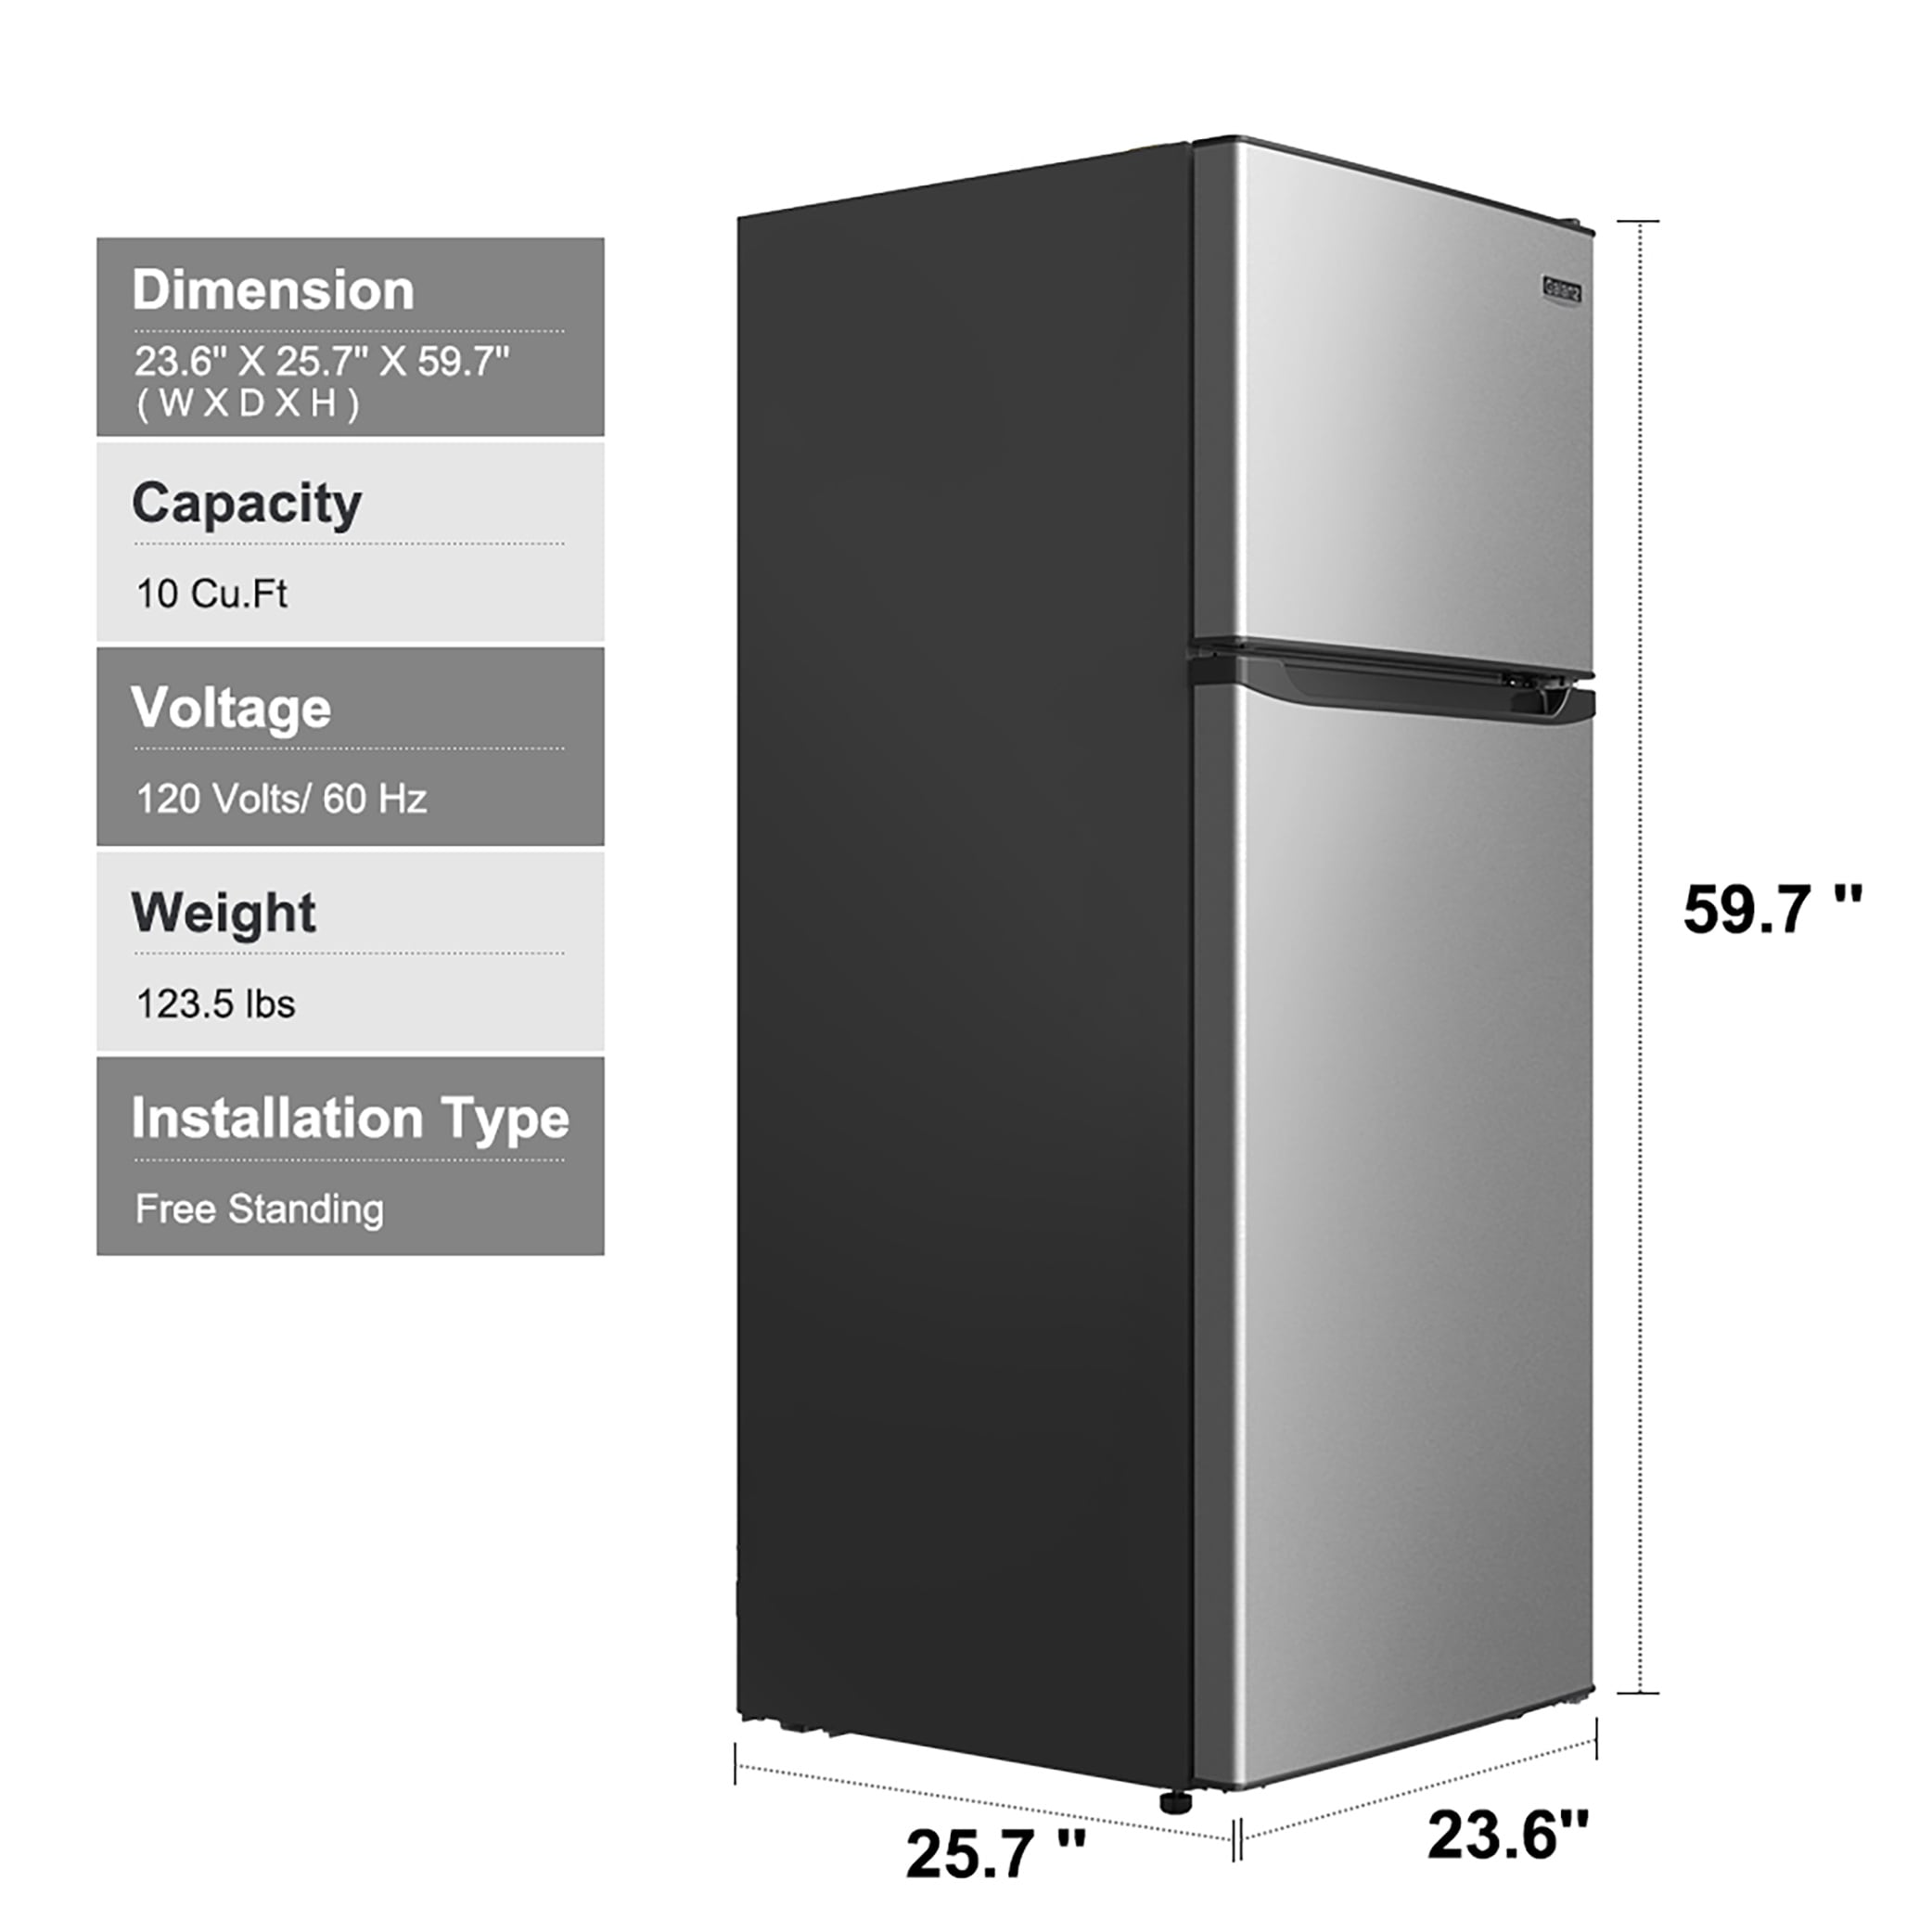 Refrigerator suggestion, Galanz 12.0 cubic foot. : r/skoolies